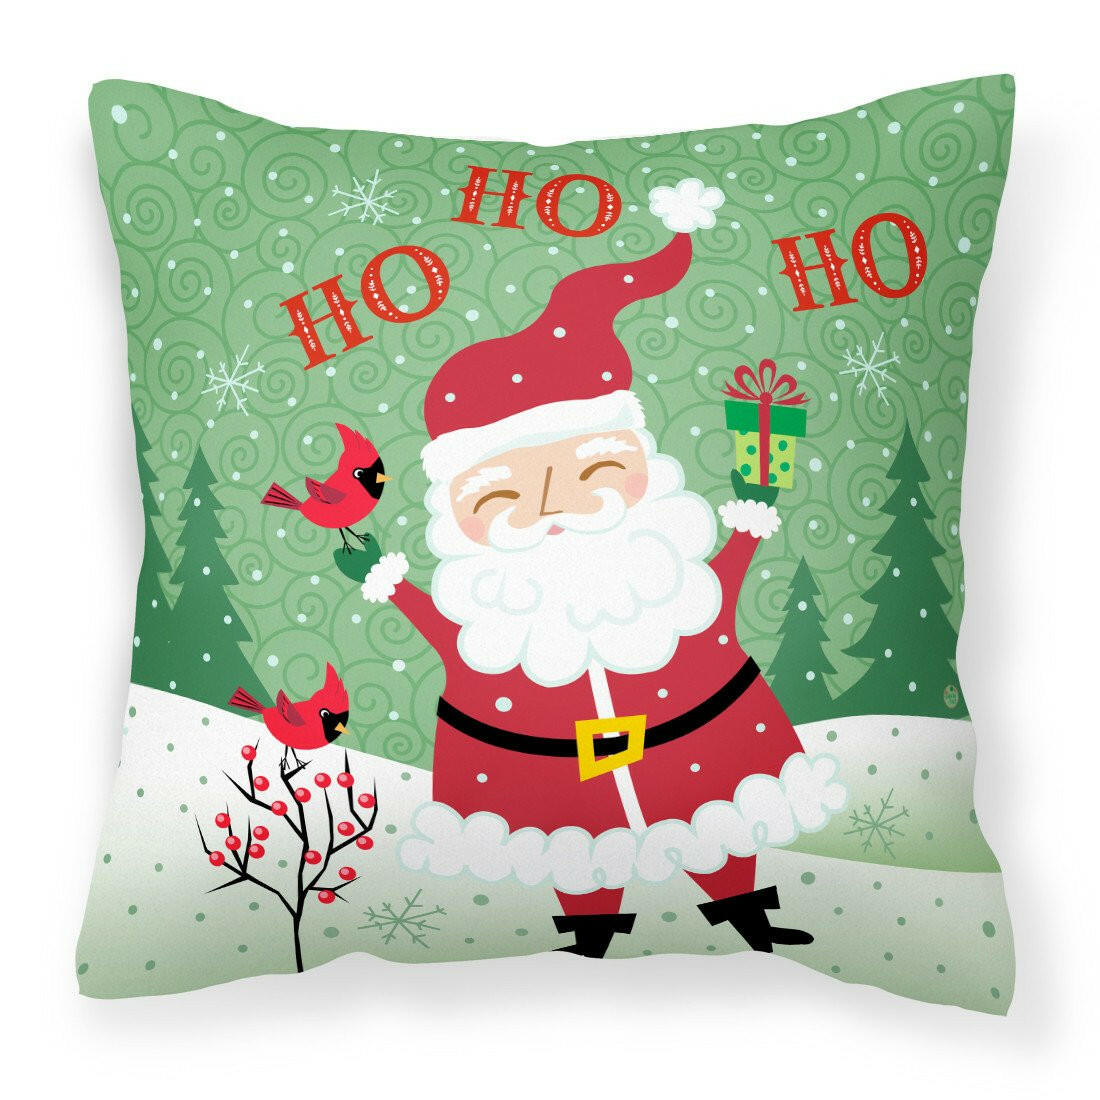 Merry Christmas Santa Claus Ho Ho Ho Fabric Decorative Pillow VHA3016PW1414 by Caroline's Treasures